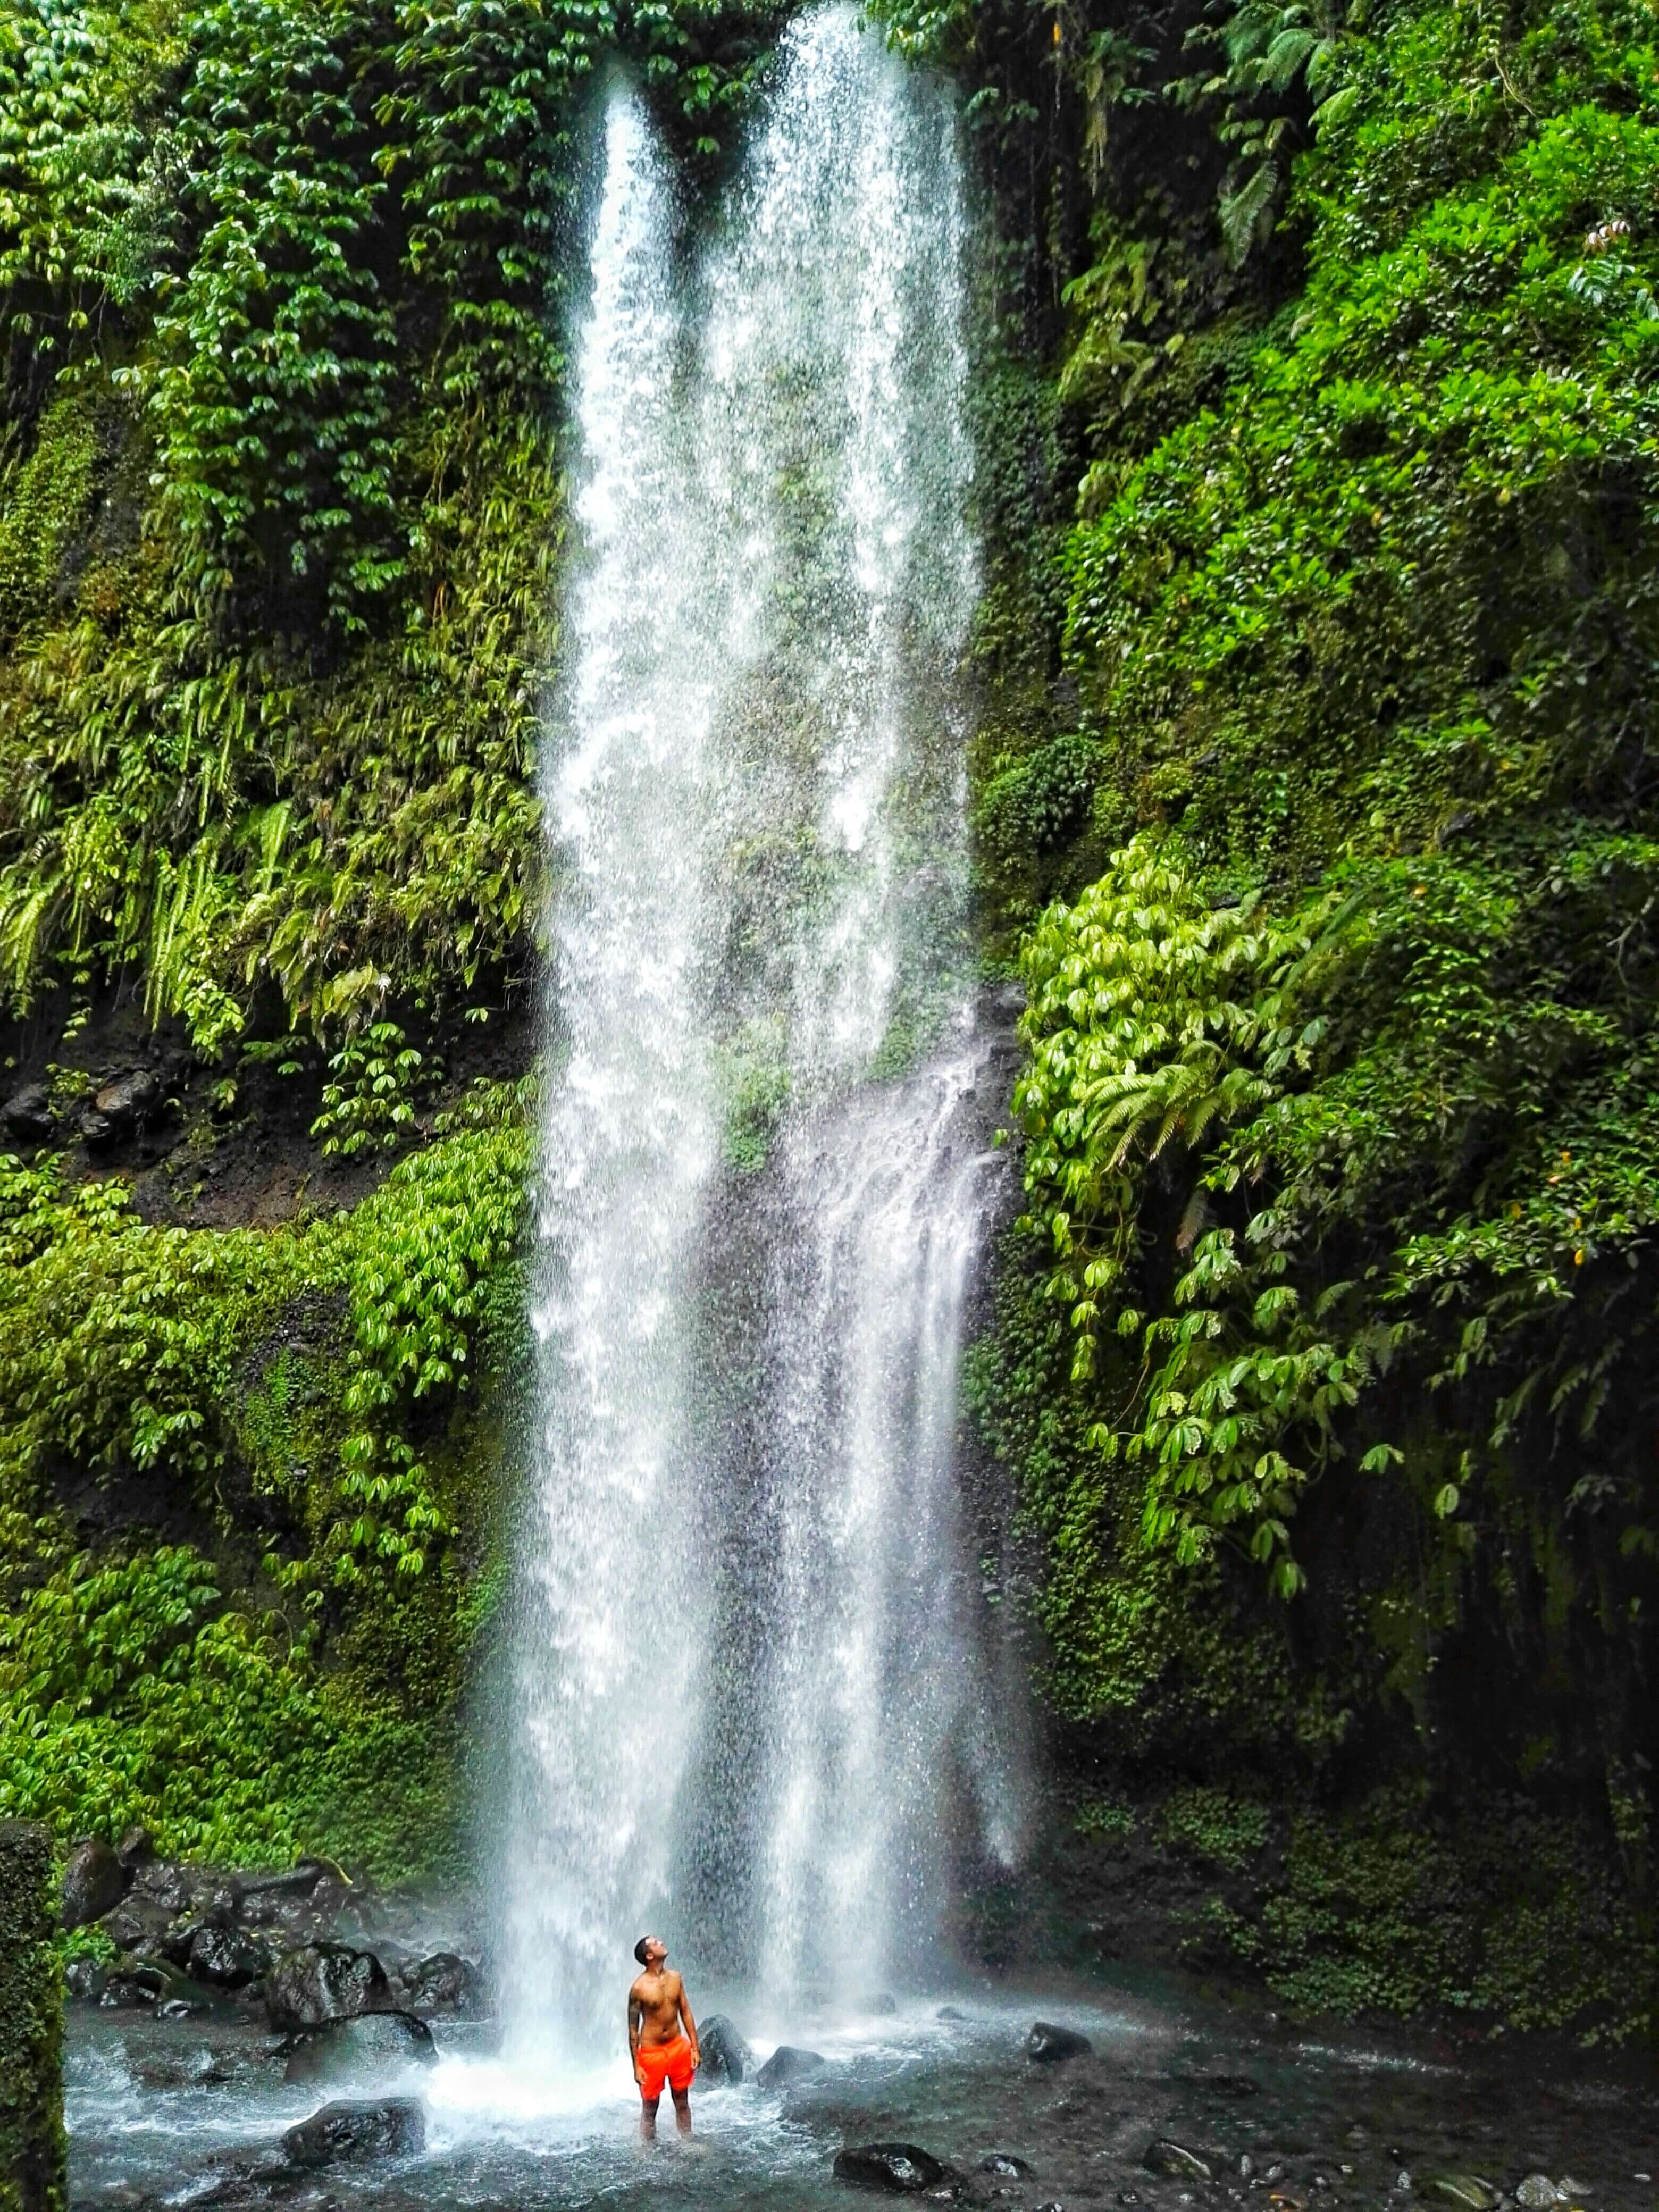 How to Find the Tiu Kelep Waterfall In Lombok